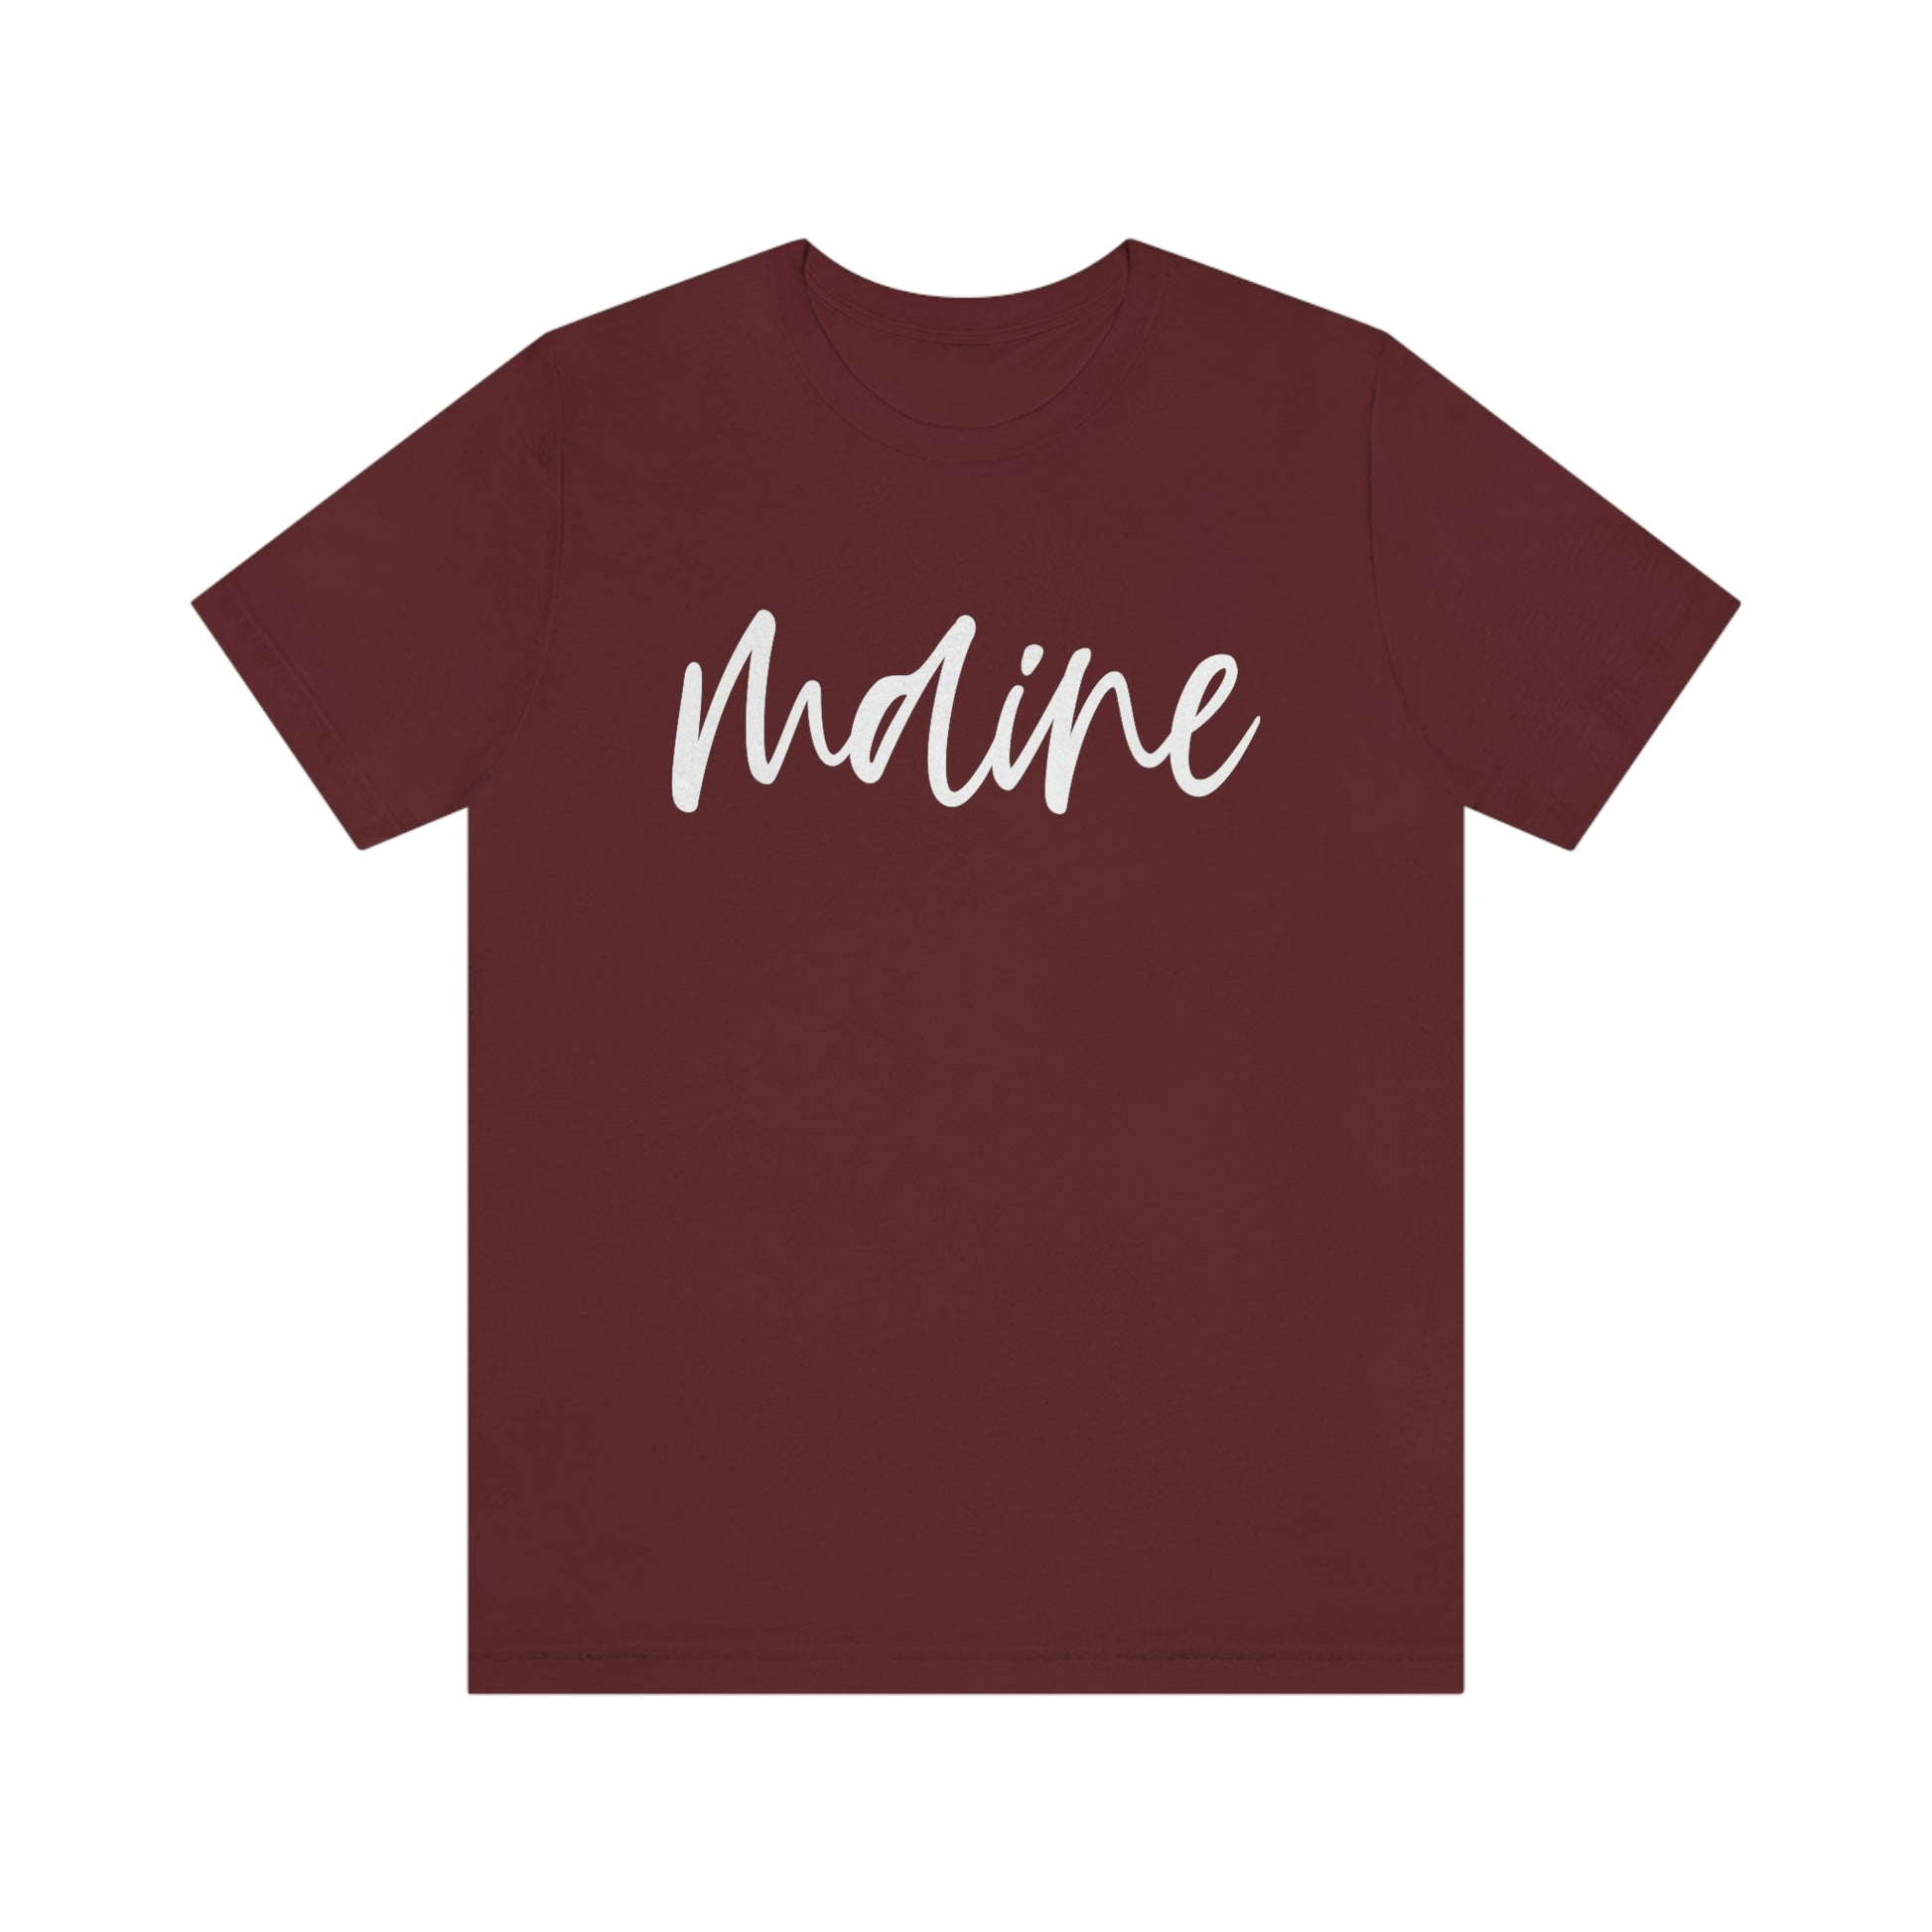 Maine White Script Short Sleeve T-shirt